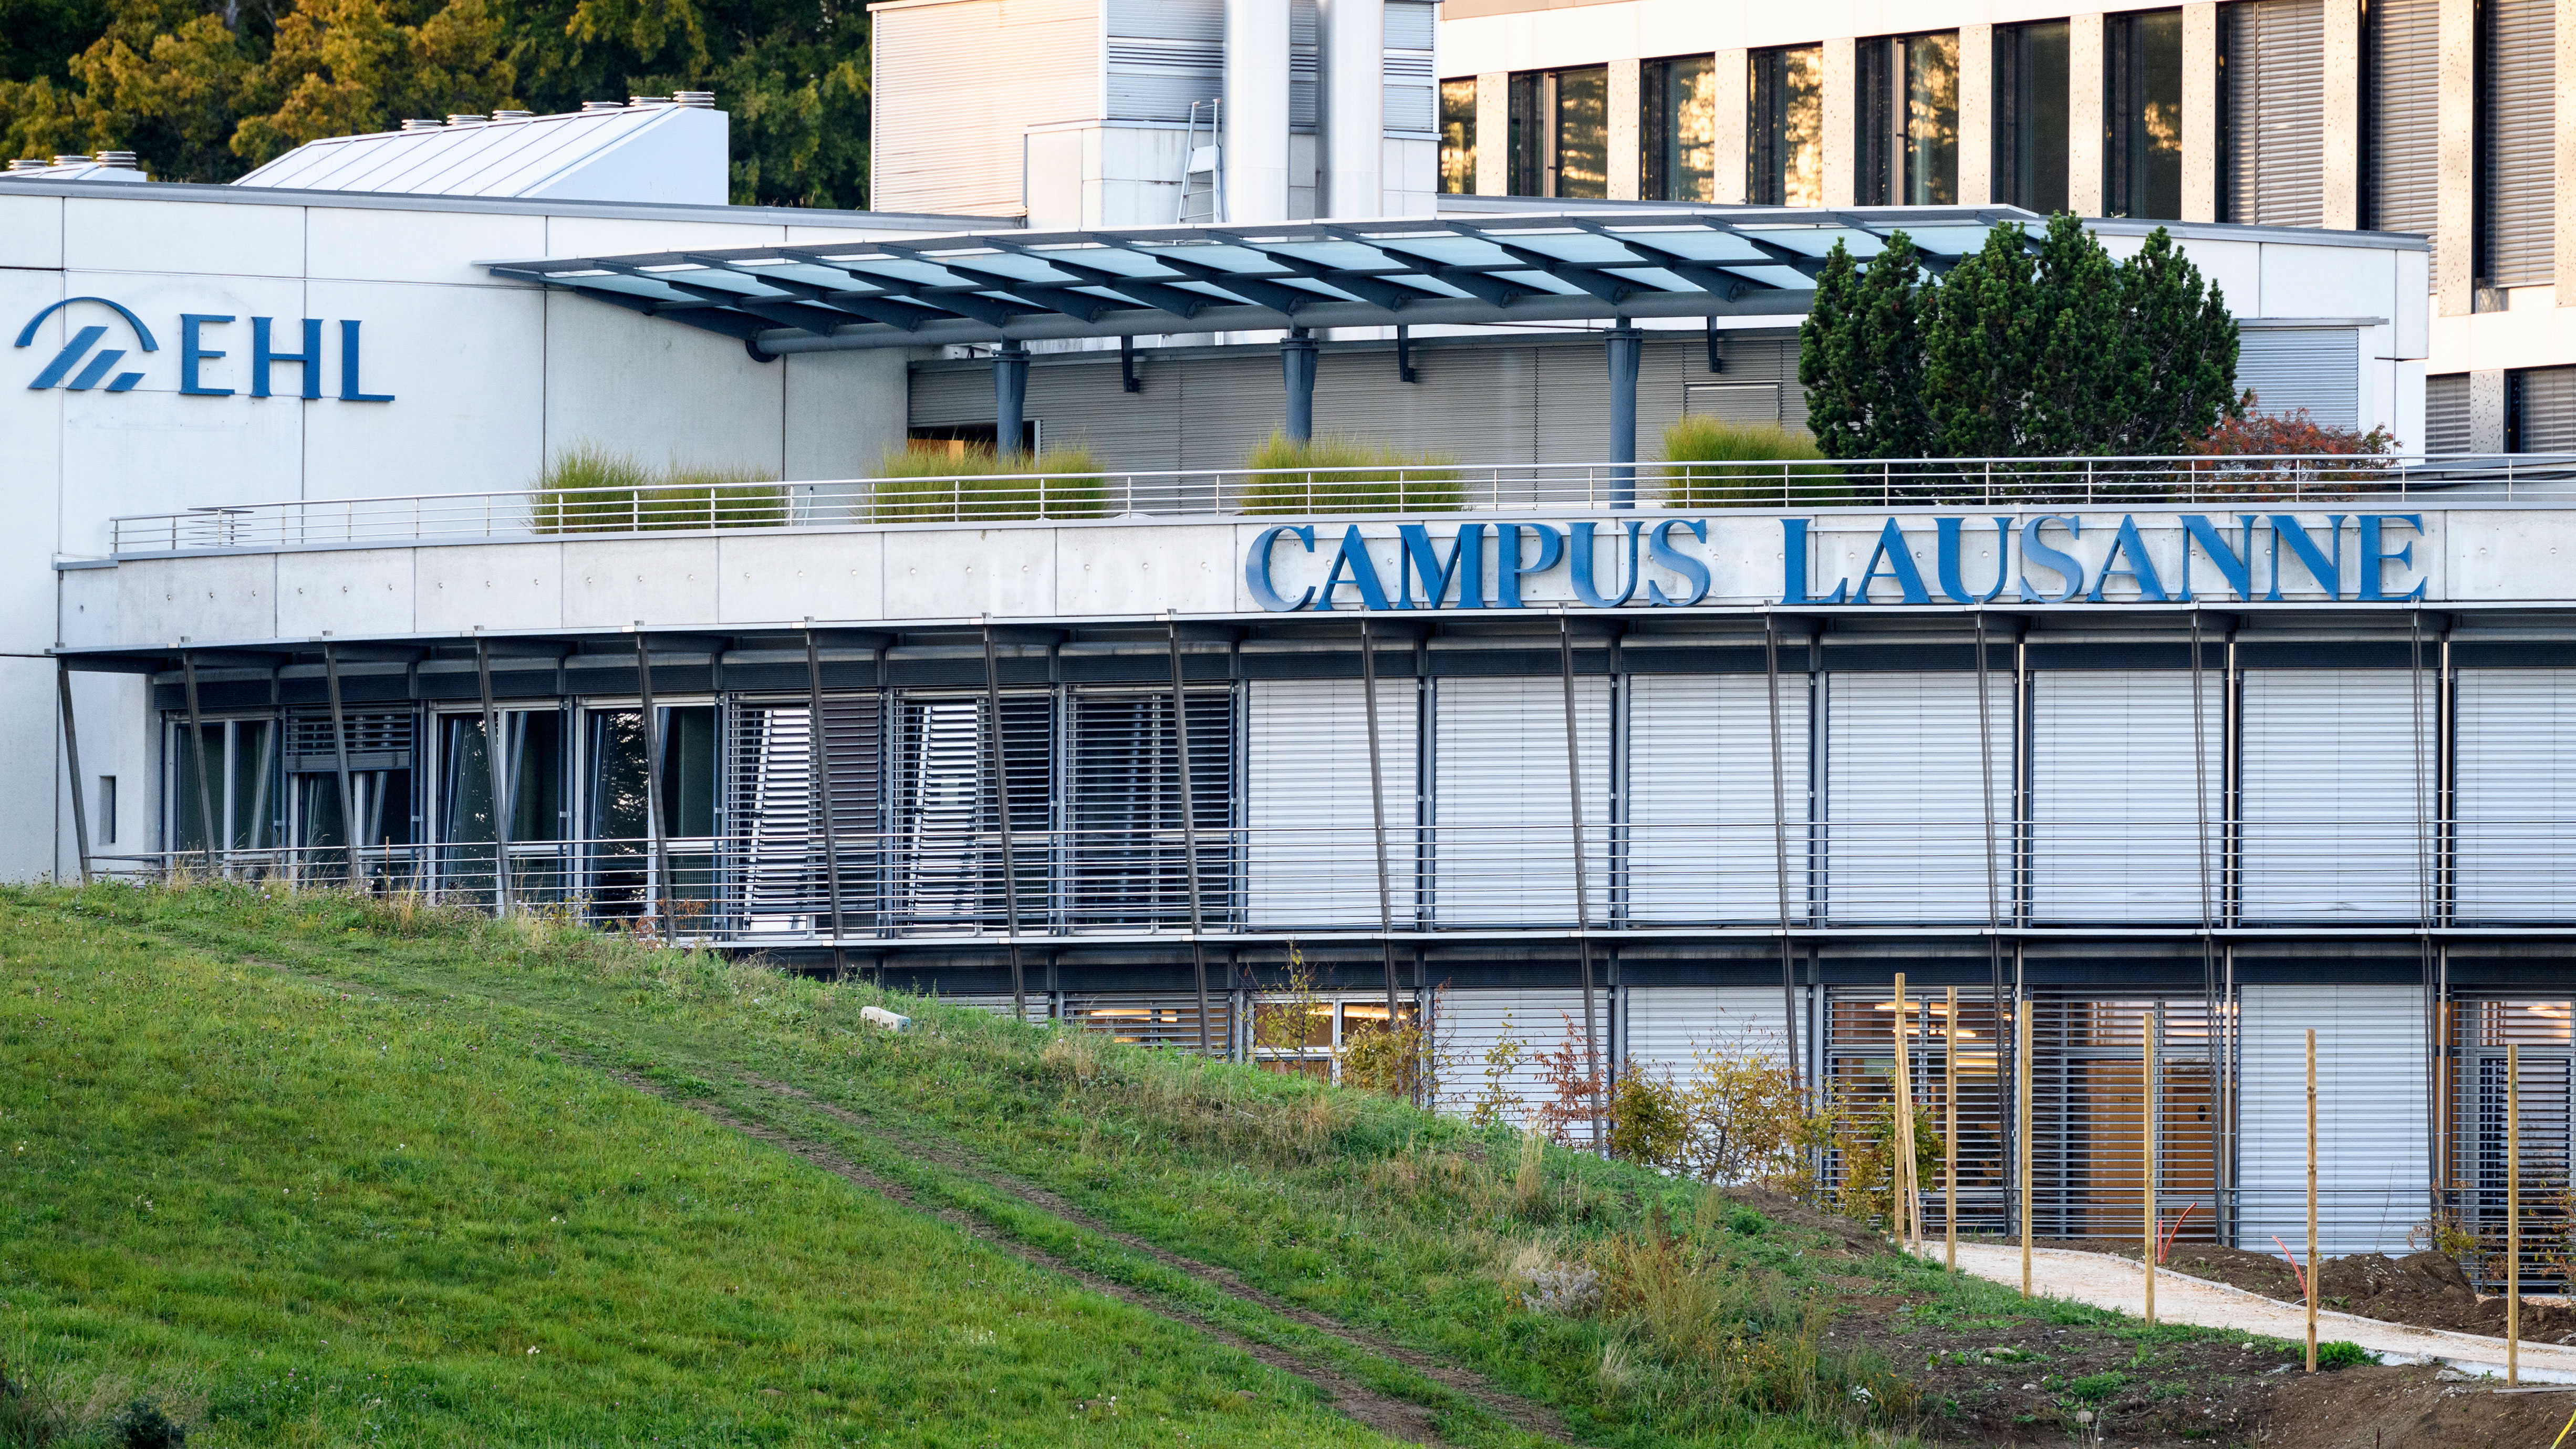 Ecole hôtelière de Lausanne is pictured in Switzerland on September 23.